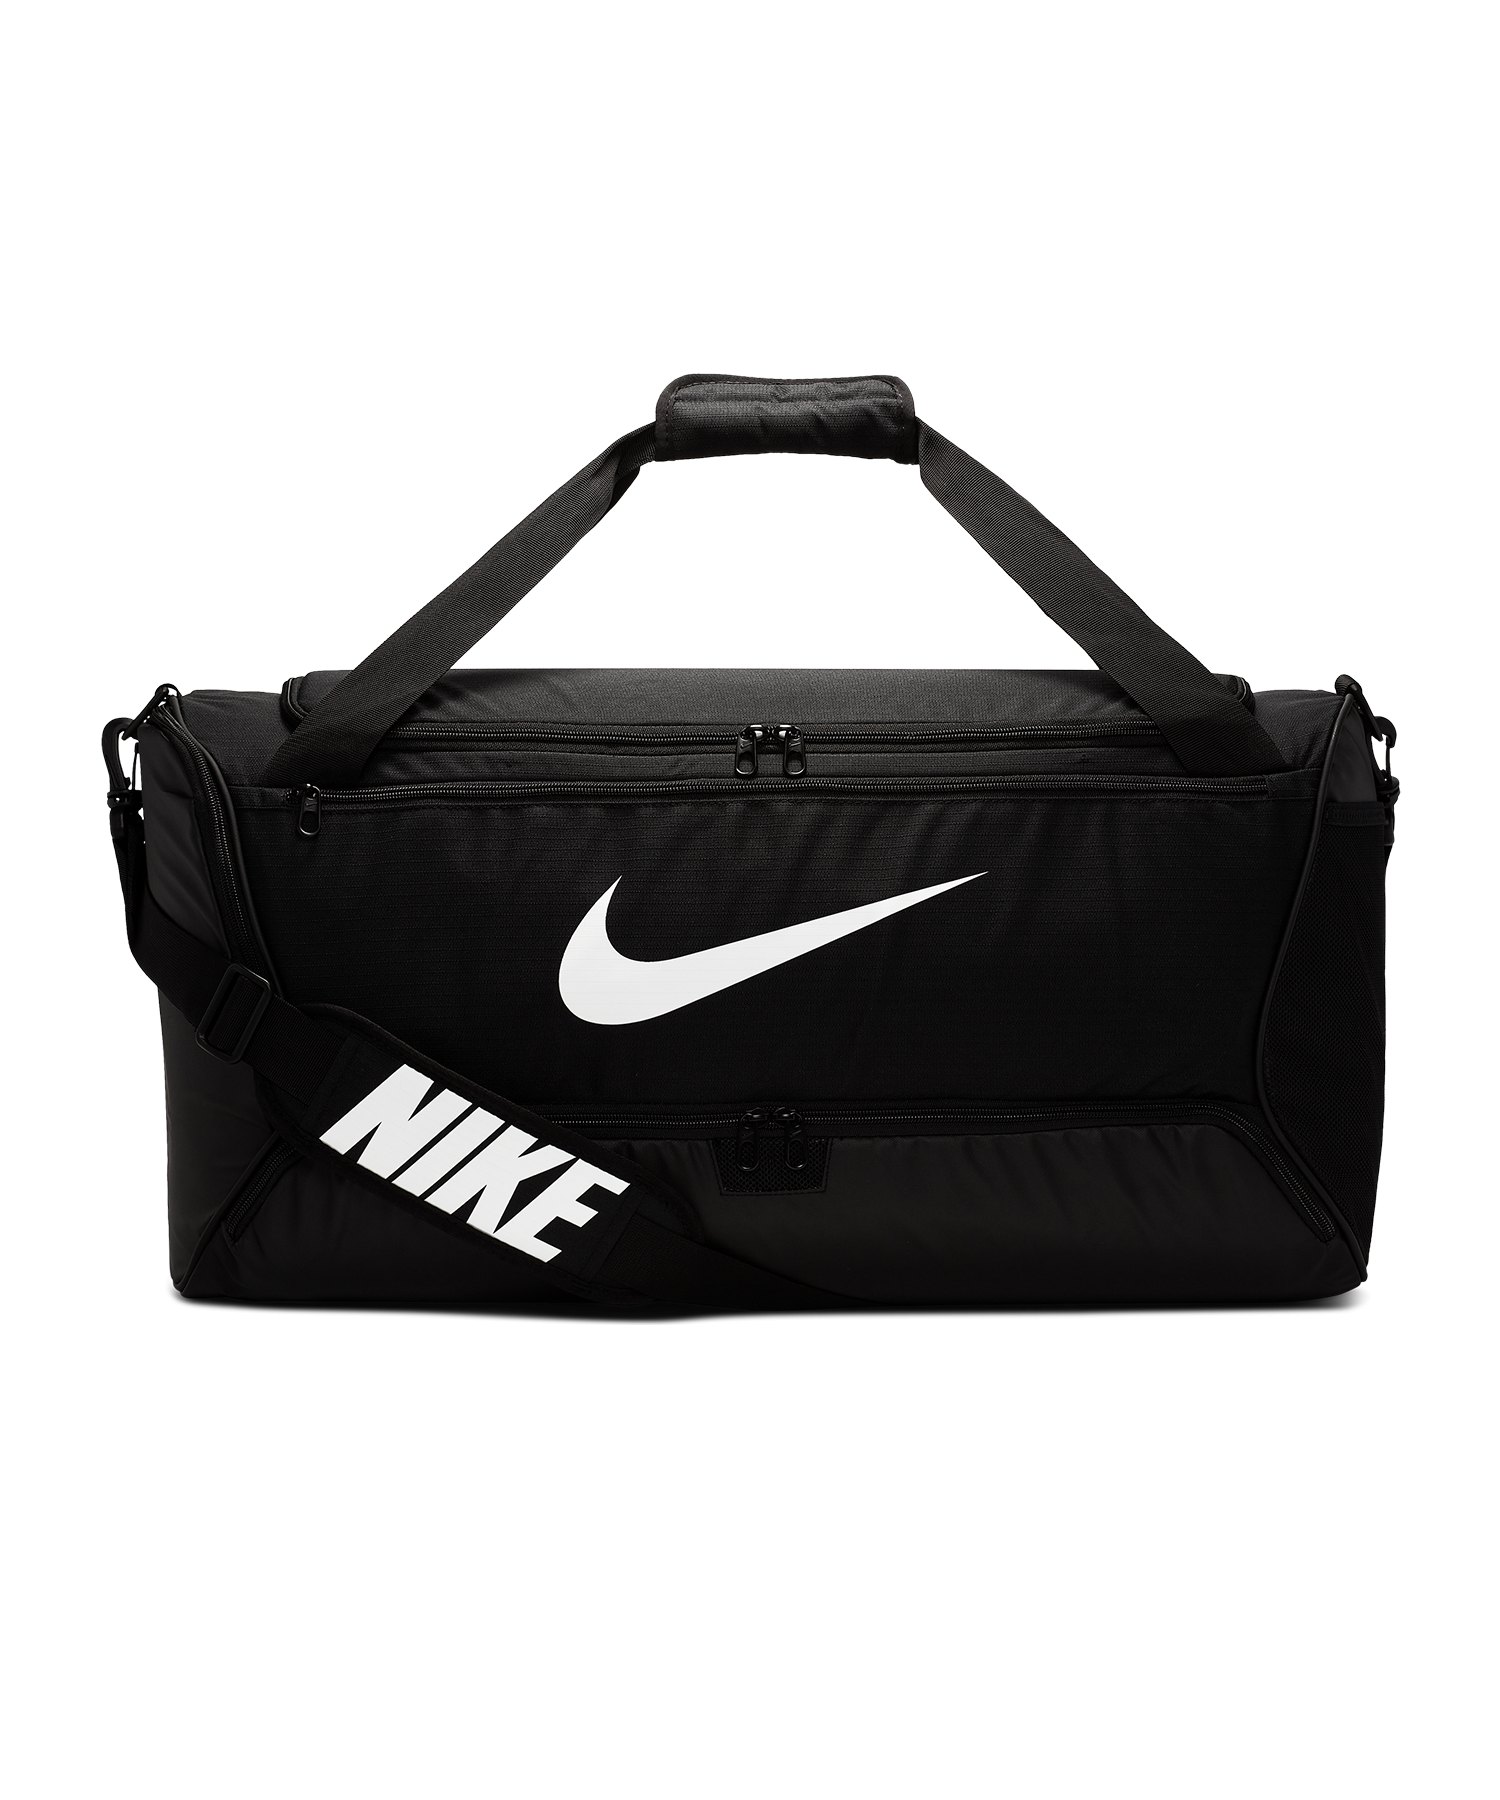 Nike Brasilia Duffel Bag Tasche Medium F010 - schwarz